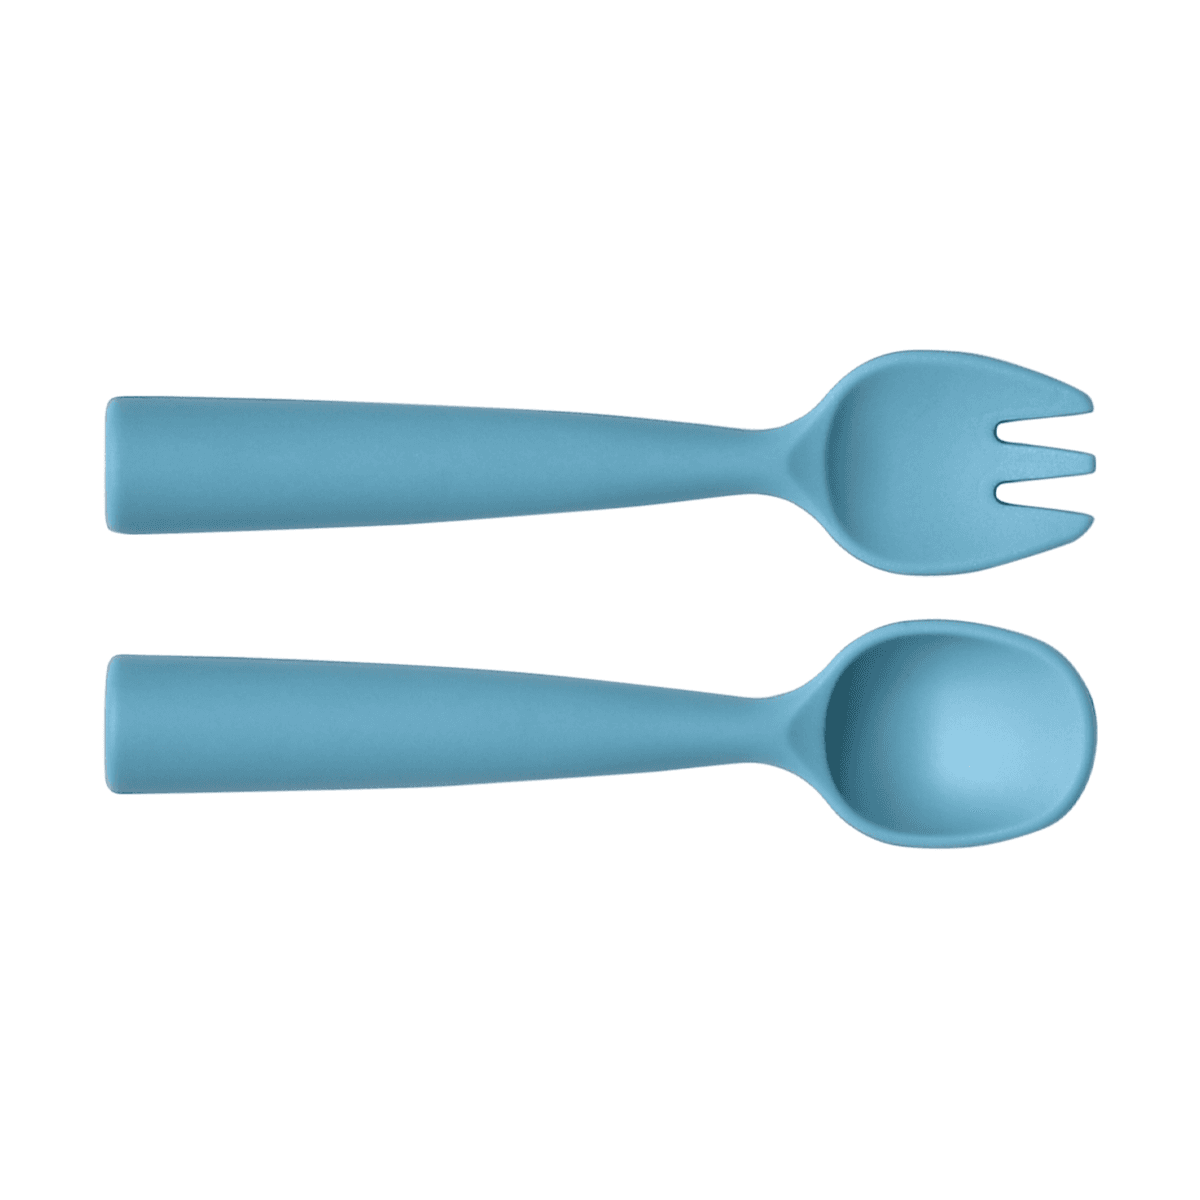 طقم ملعقة شوكة سيليكون للأطفال أزرق من ڤاج Vague Silicone Spoon & Fork Set for Kids